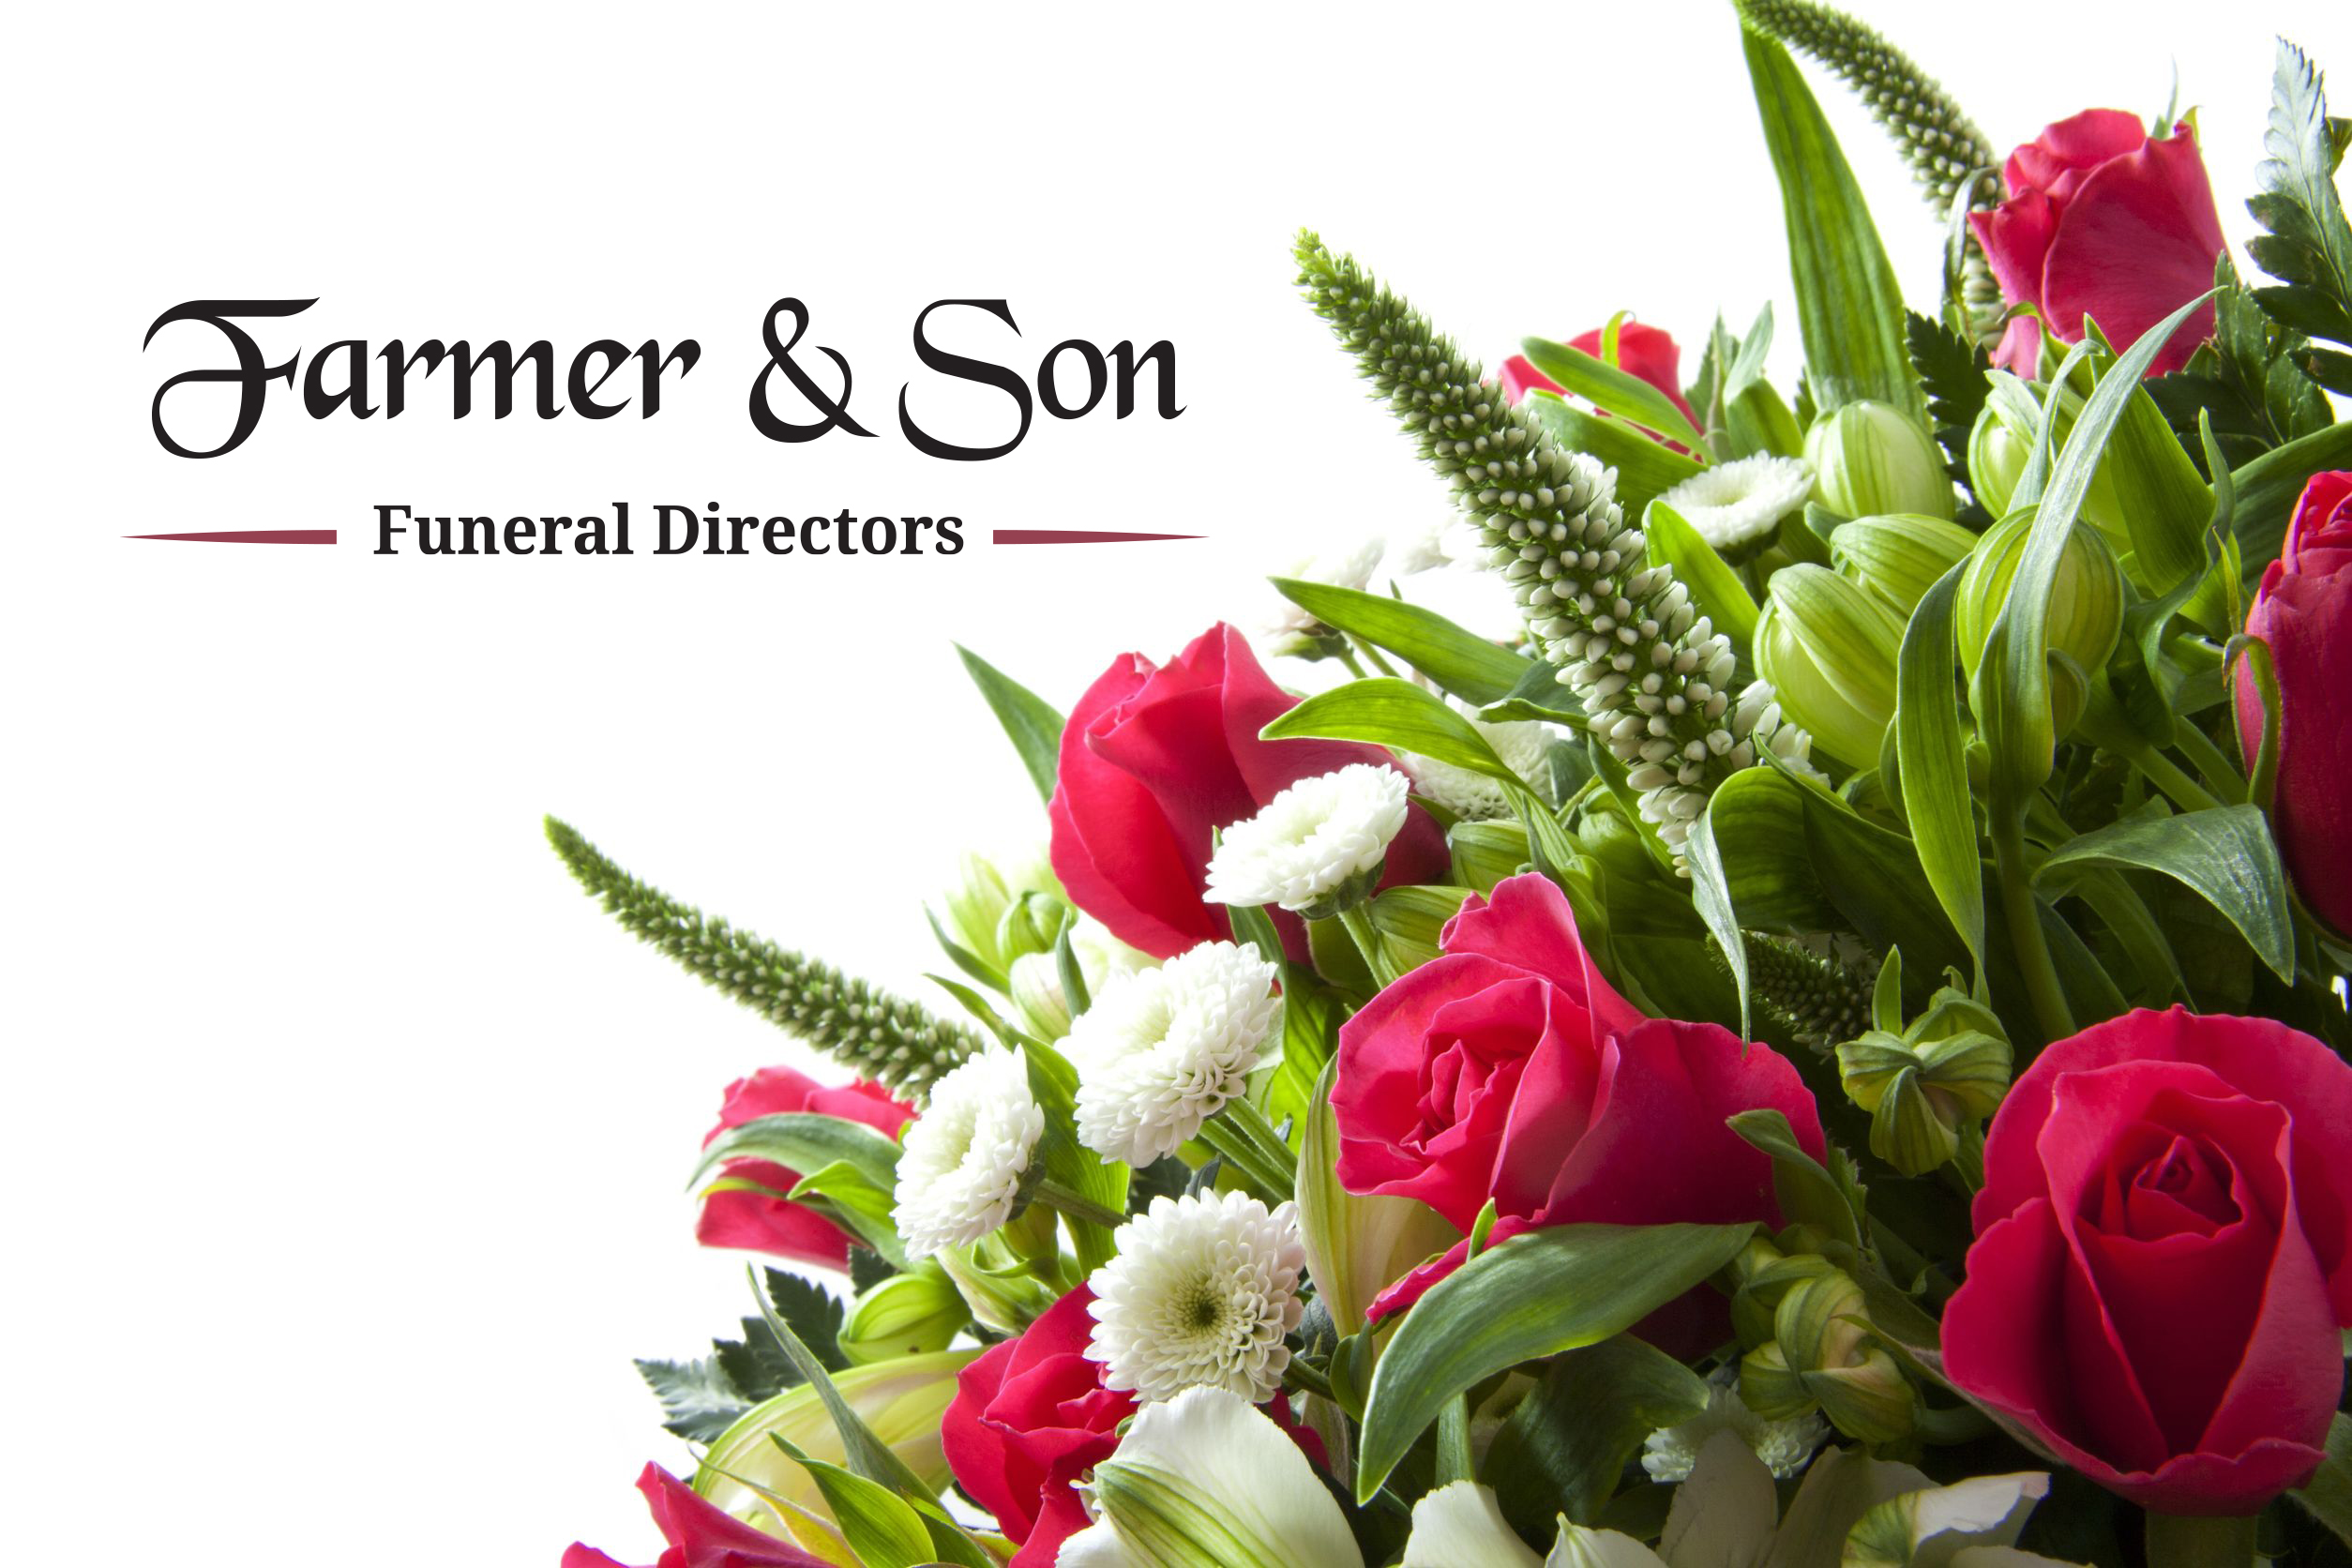 Farmer & Son Funeral Directors